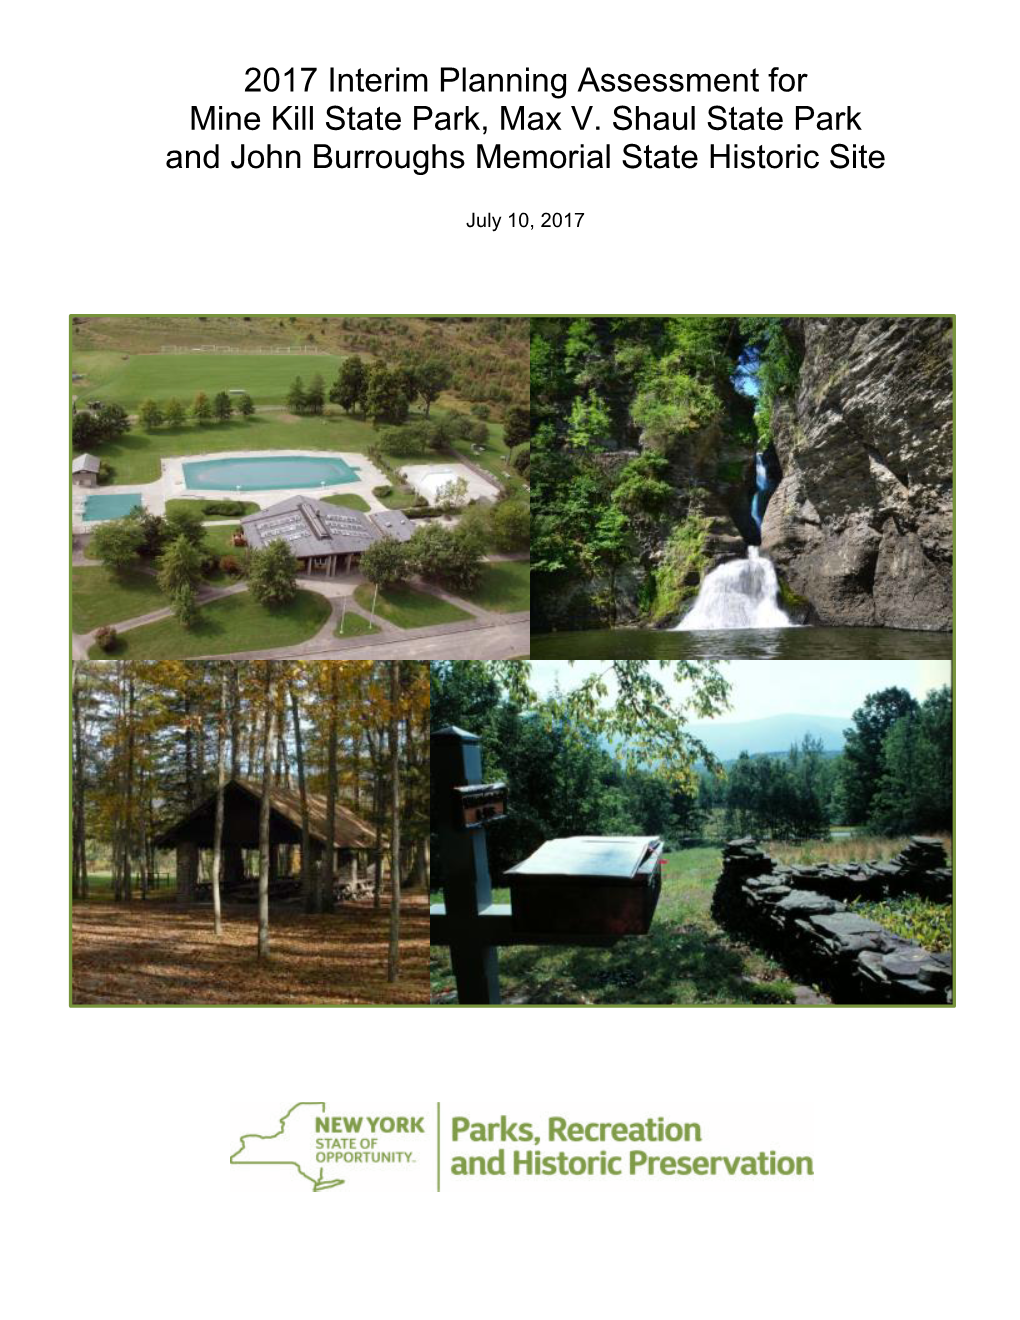 2017 Interim Planning Assessment for Mine Kill State Park, Max V